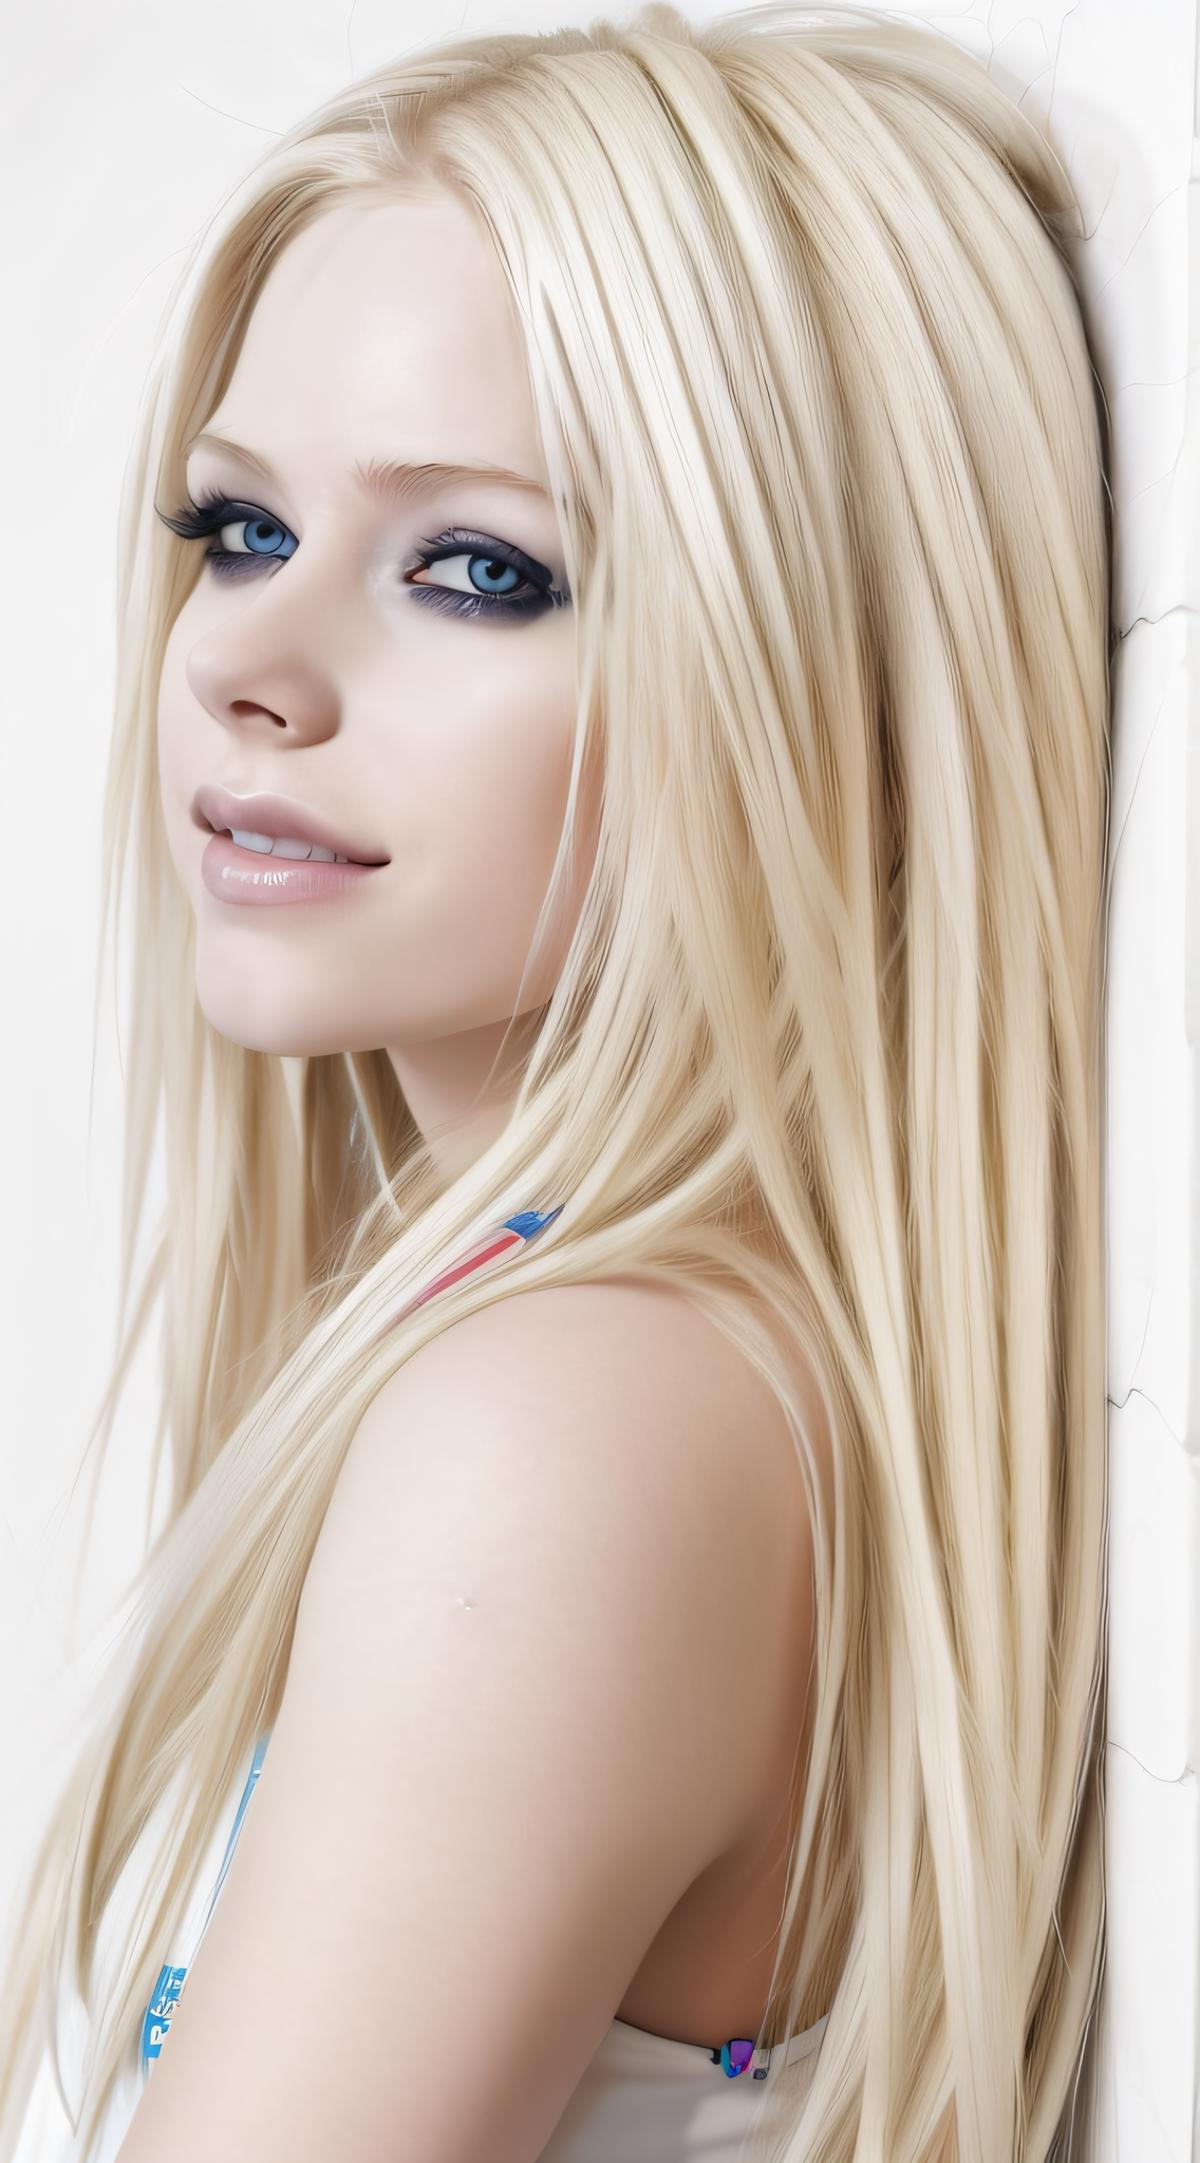 Avril Lavigne LoRA image by Roger2094